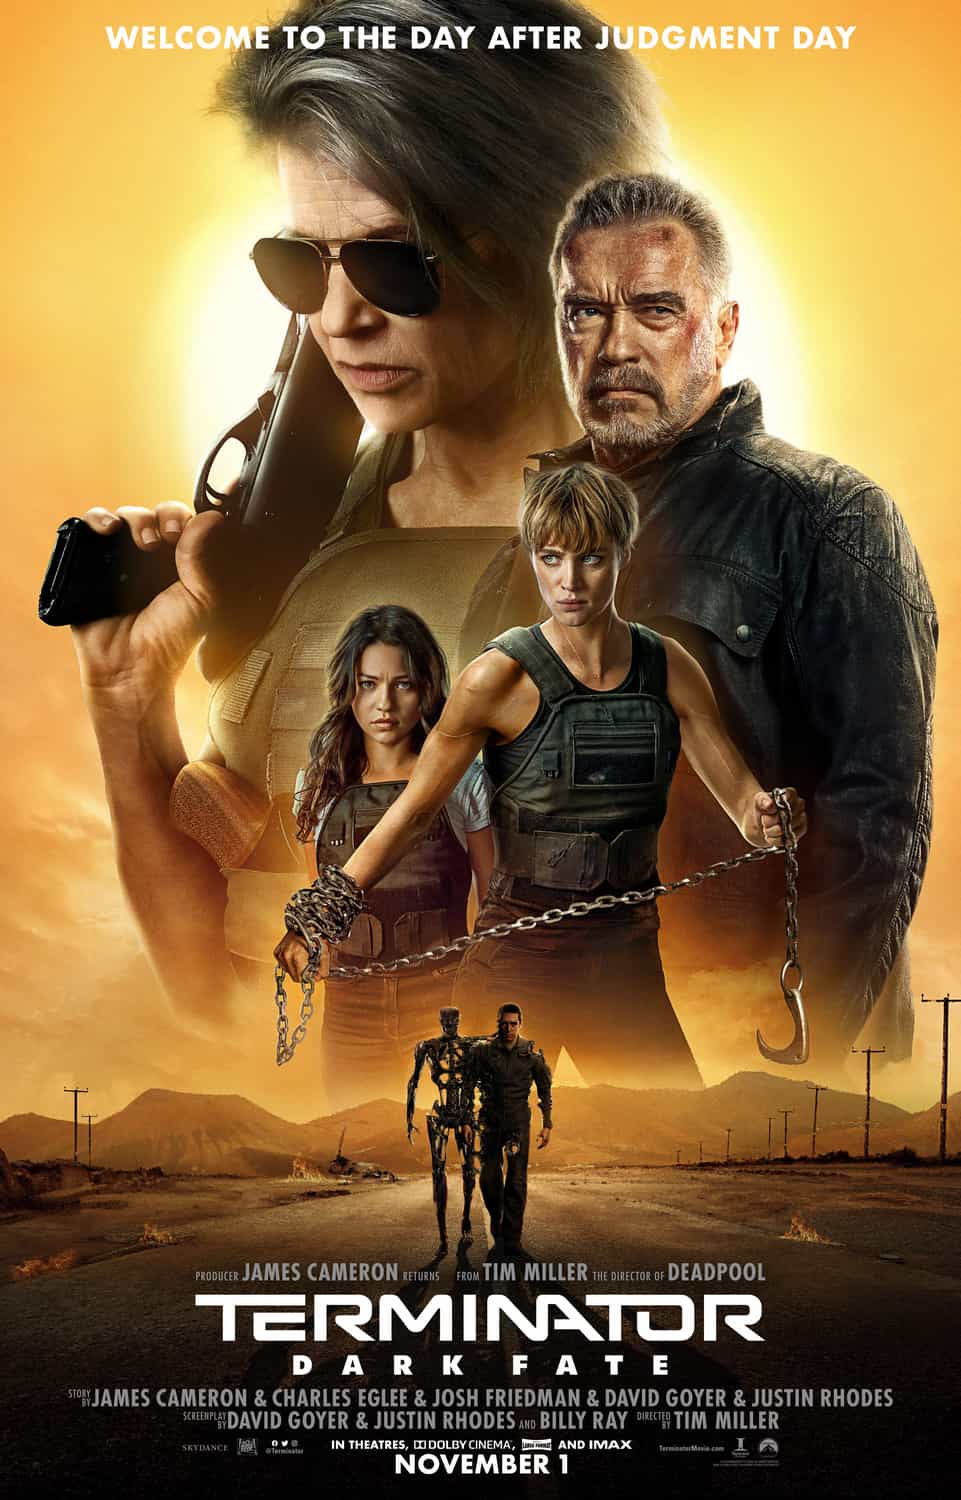 Why did Terminator: Dark Fate fail at the box office?